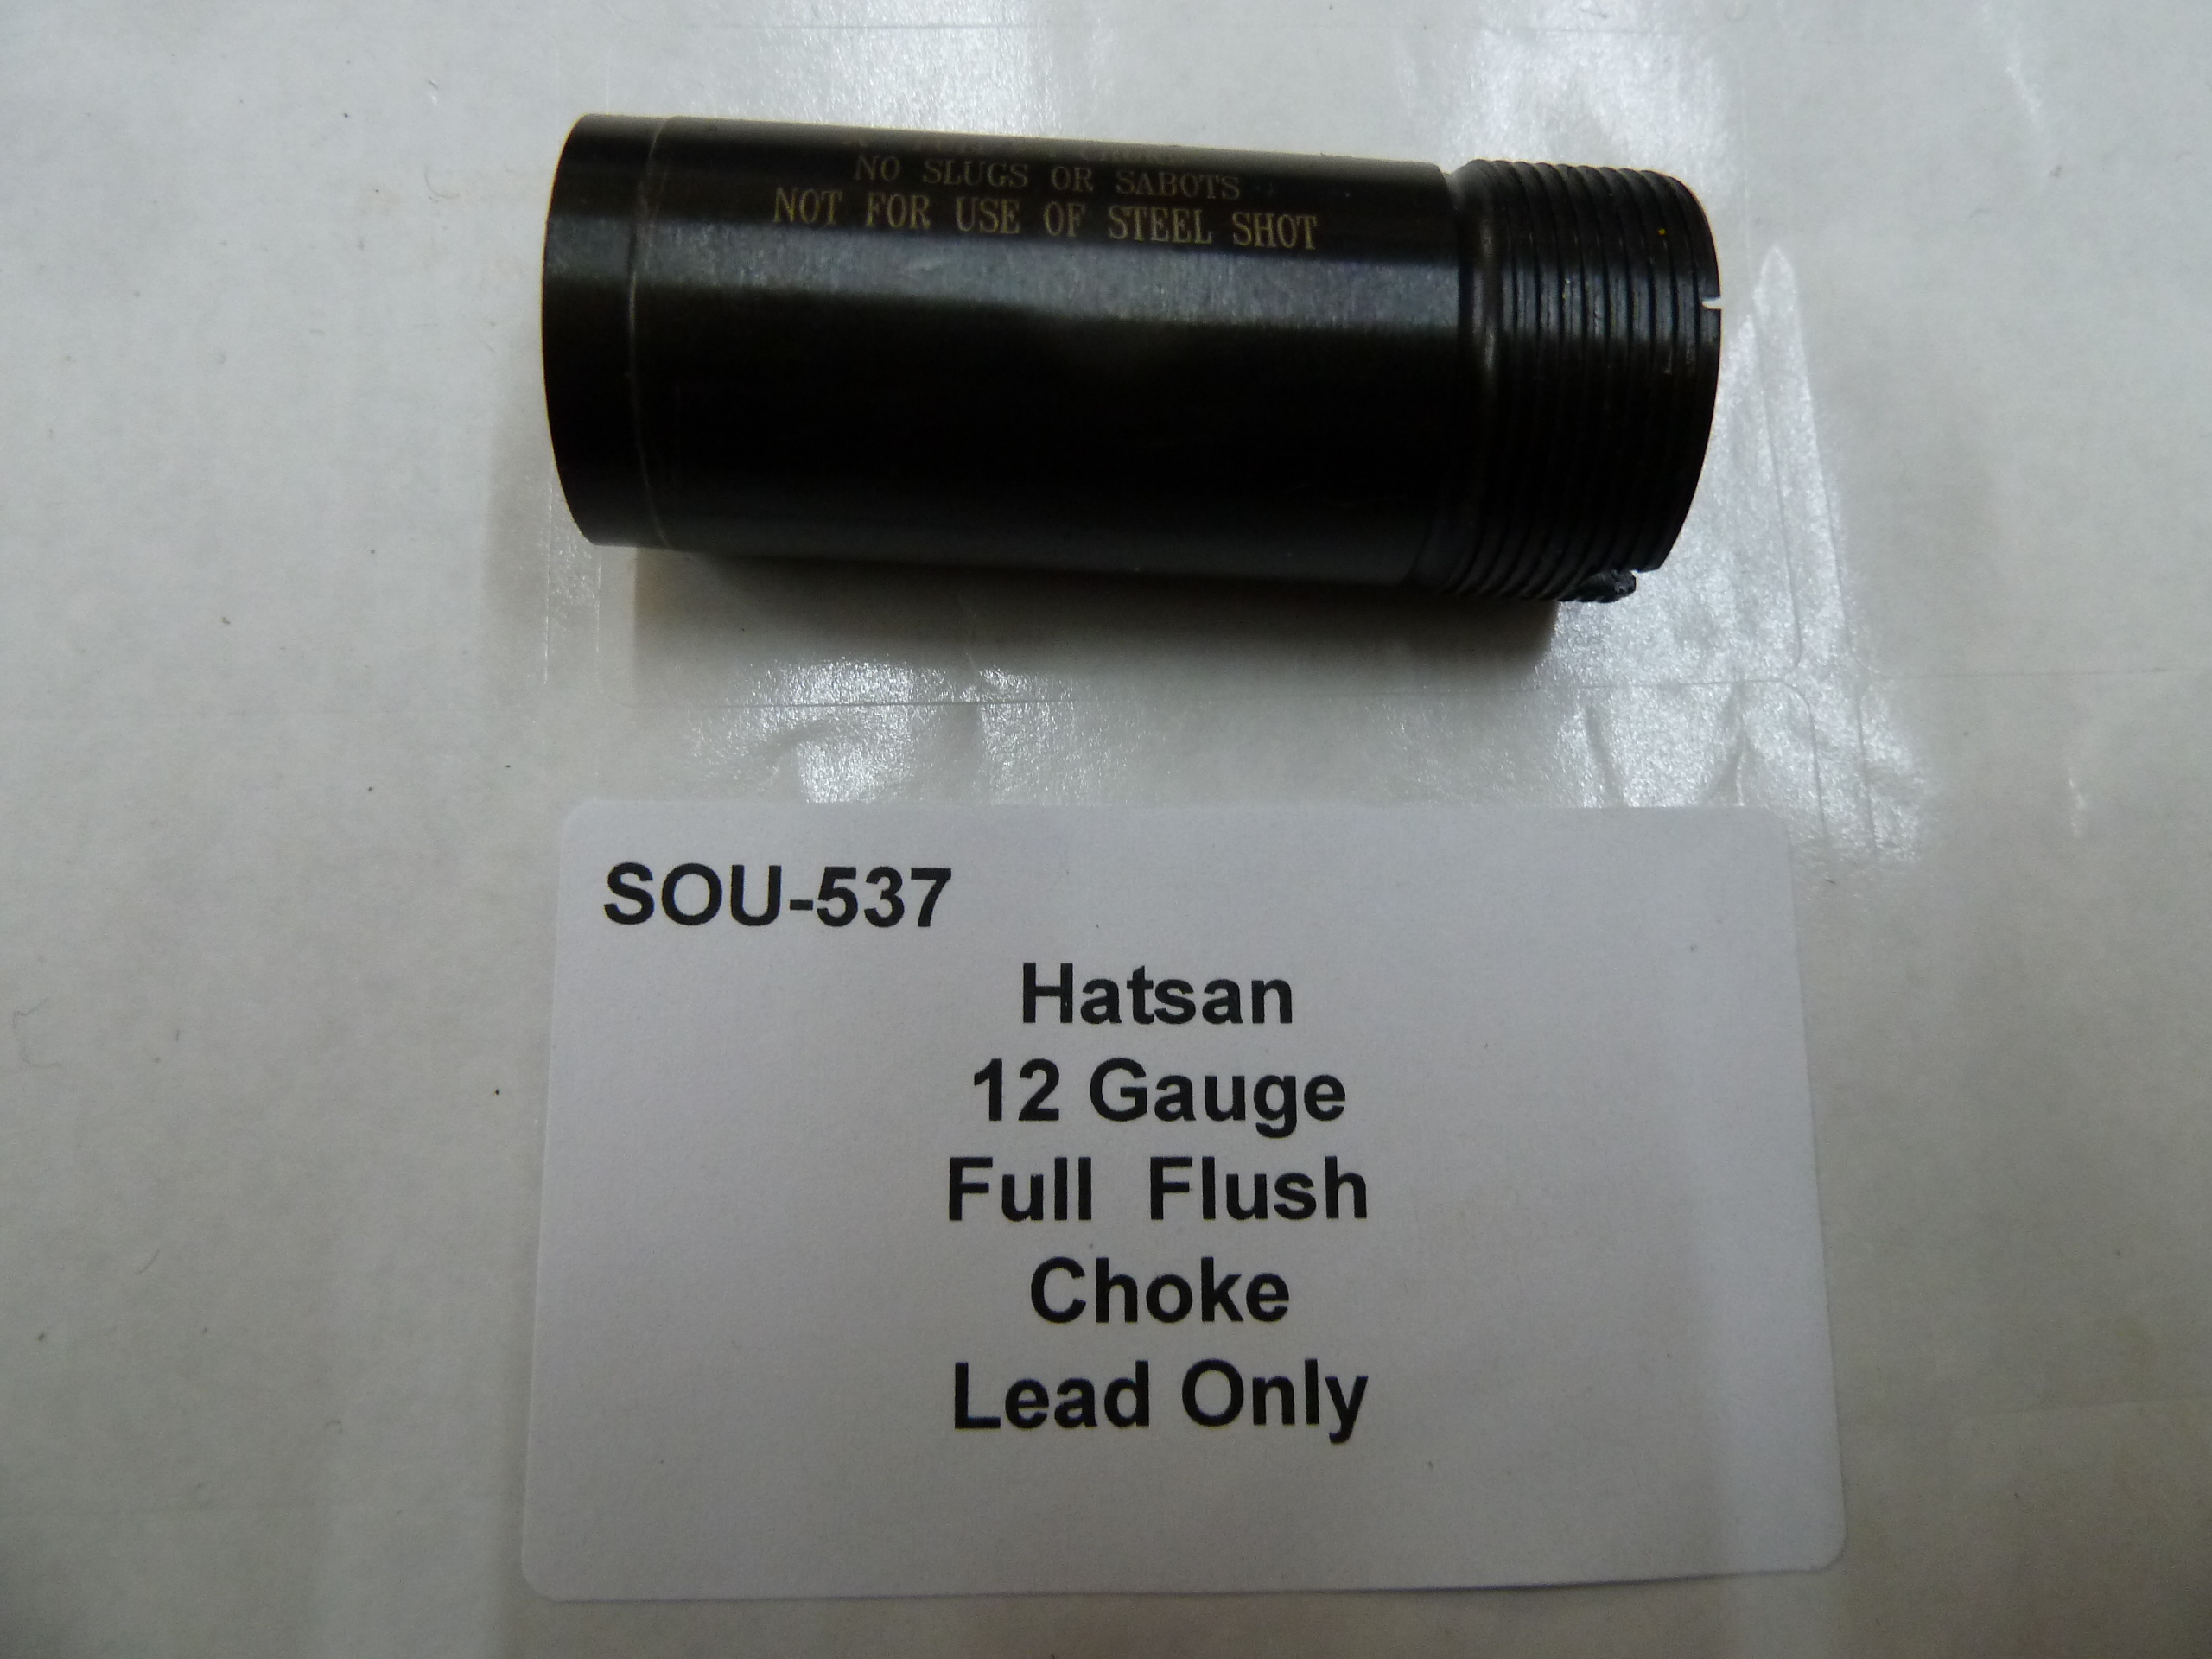 SOU-537 Hatsan 12 gauge full flush choke lead only